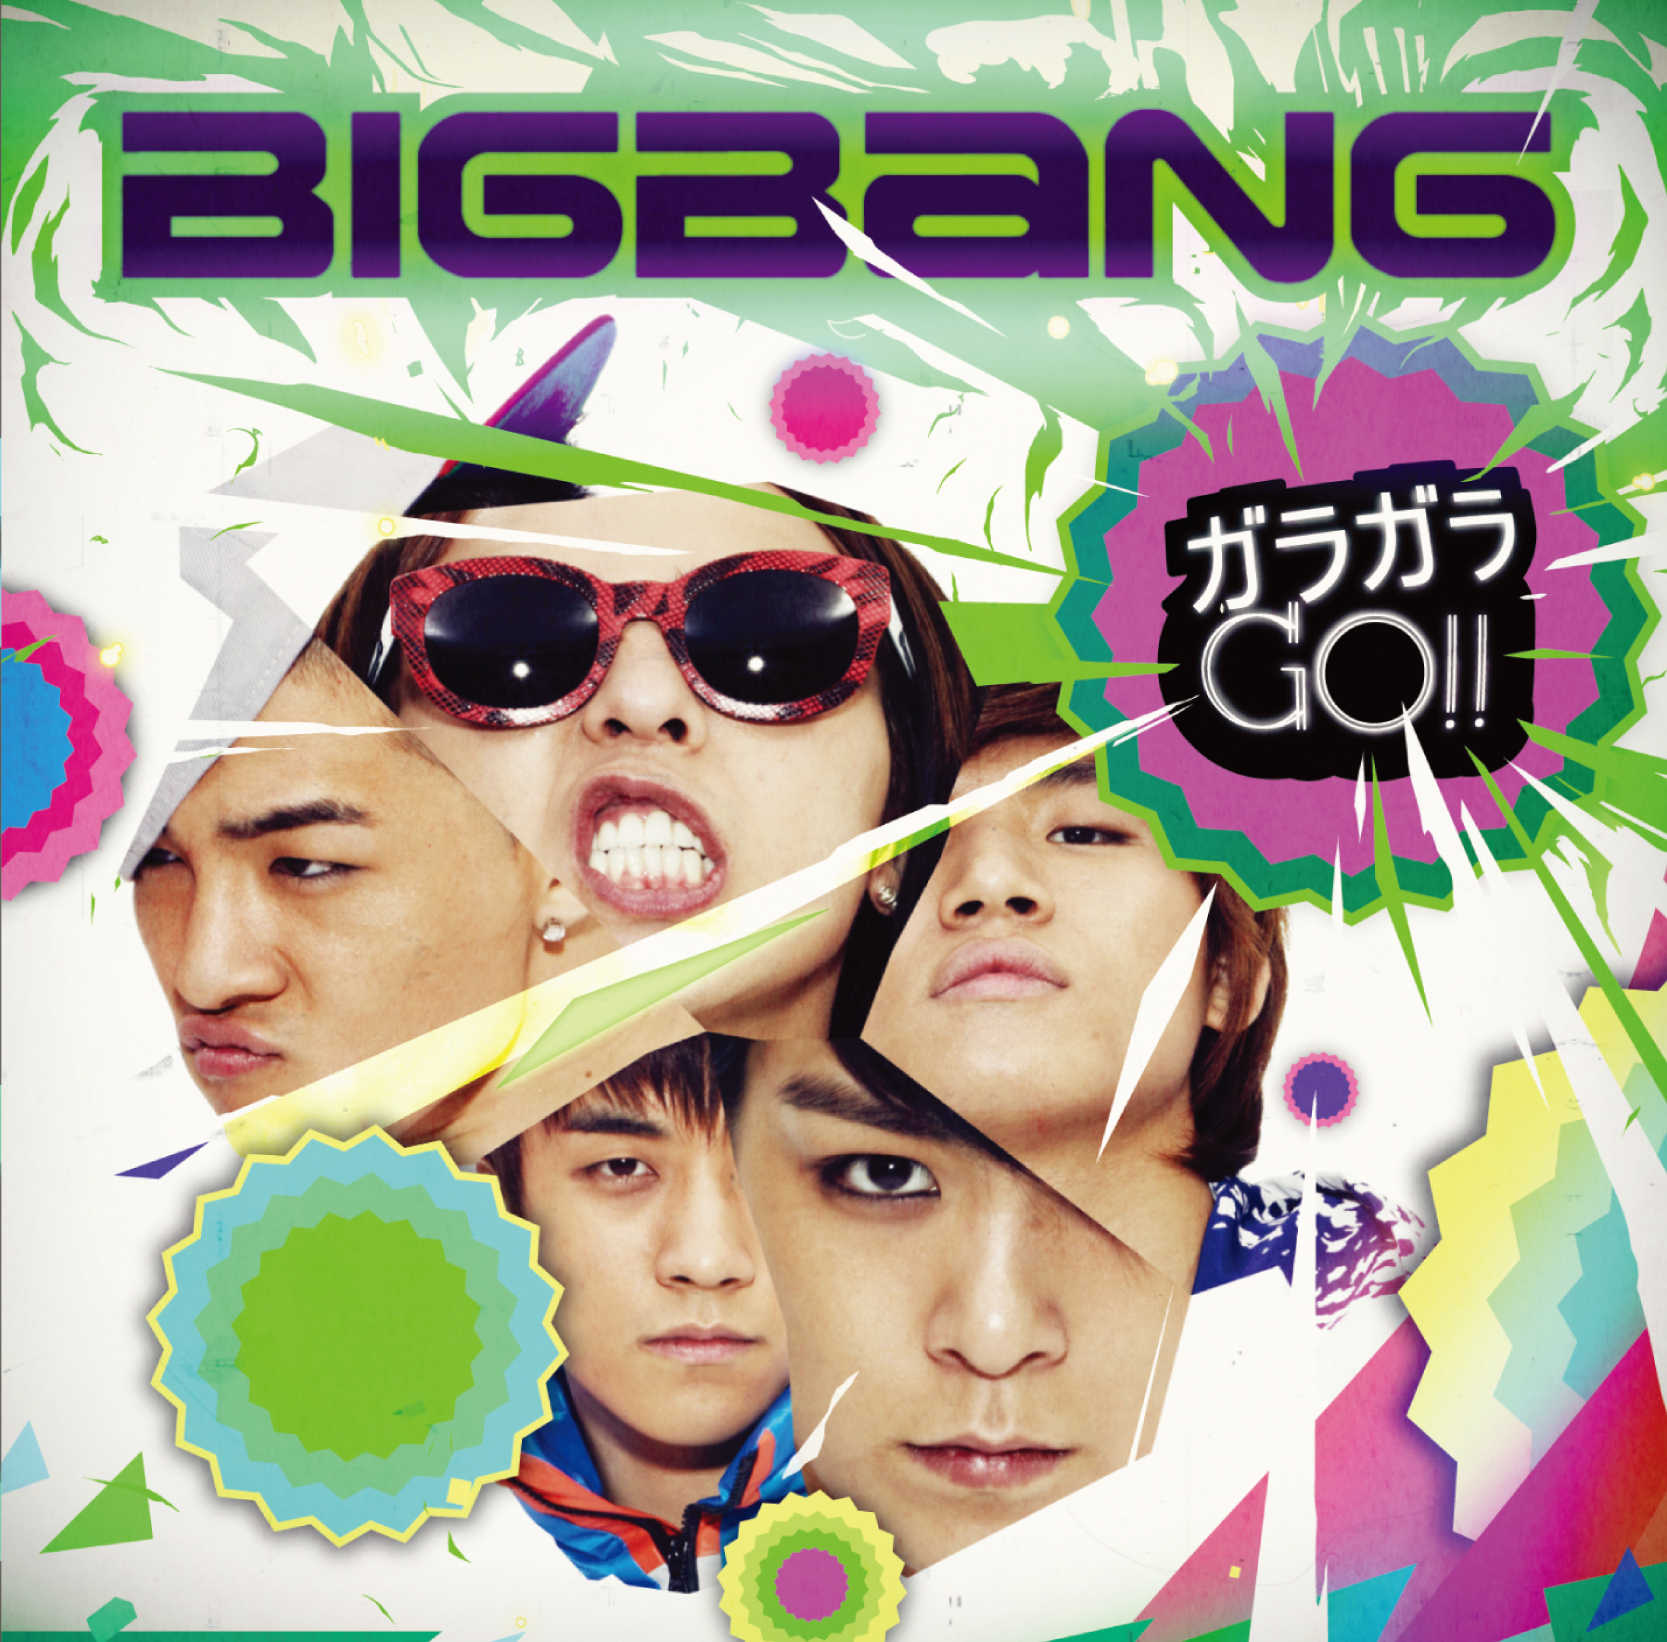 The Planet big Bang песня. Japan Bangers.